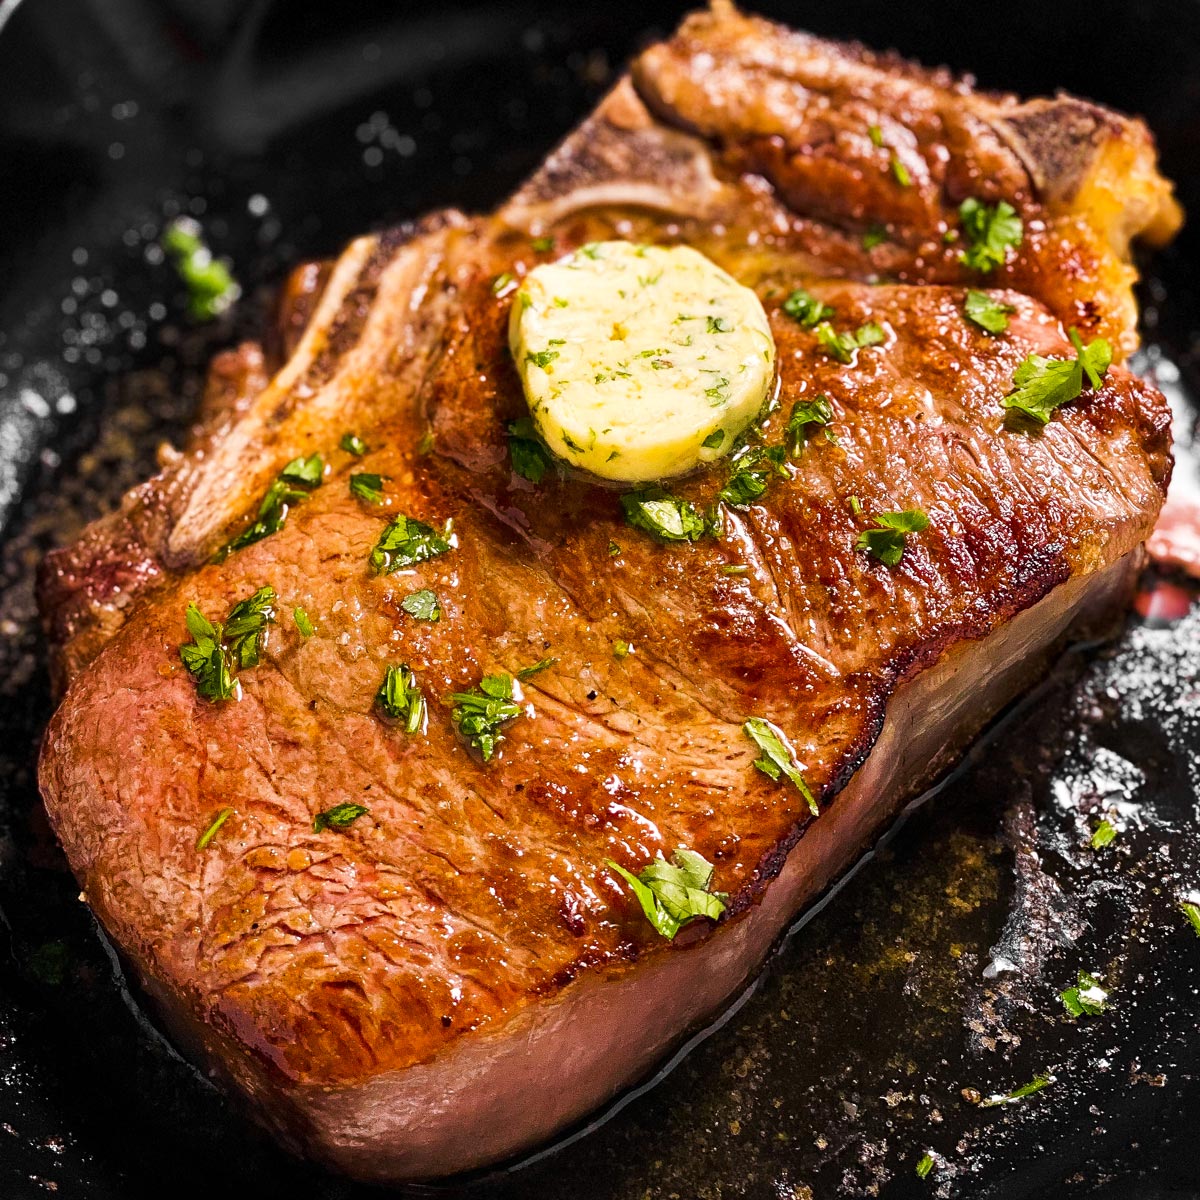 https://www.savorynothings.com/wp-content/uploads/2022/01/oven-baked-steak-recipe-image-sq-1.jpg